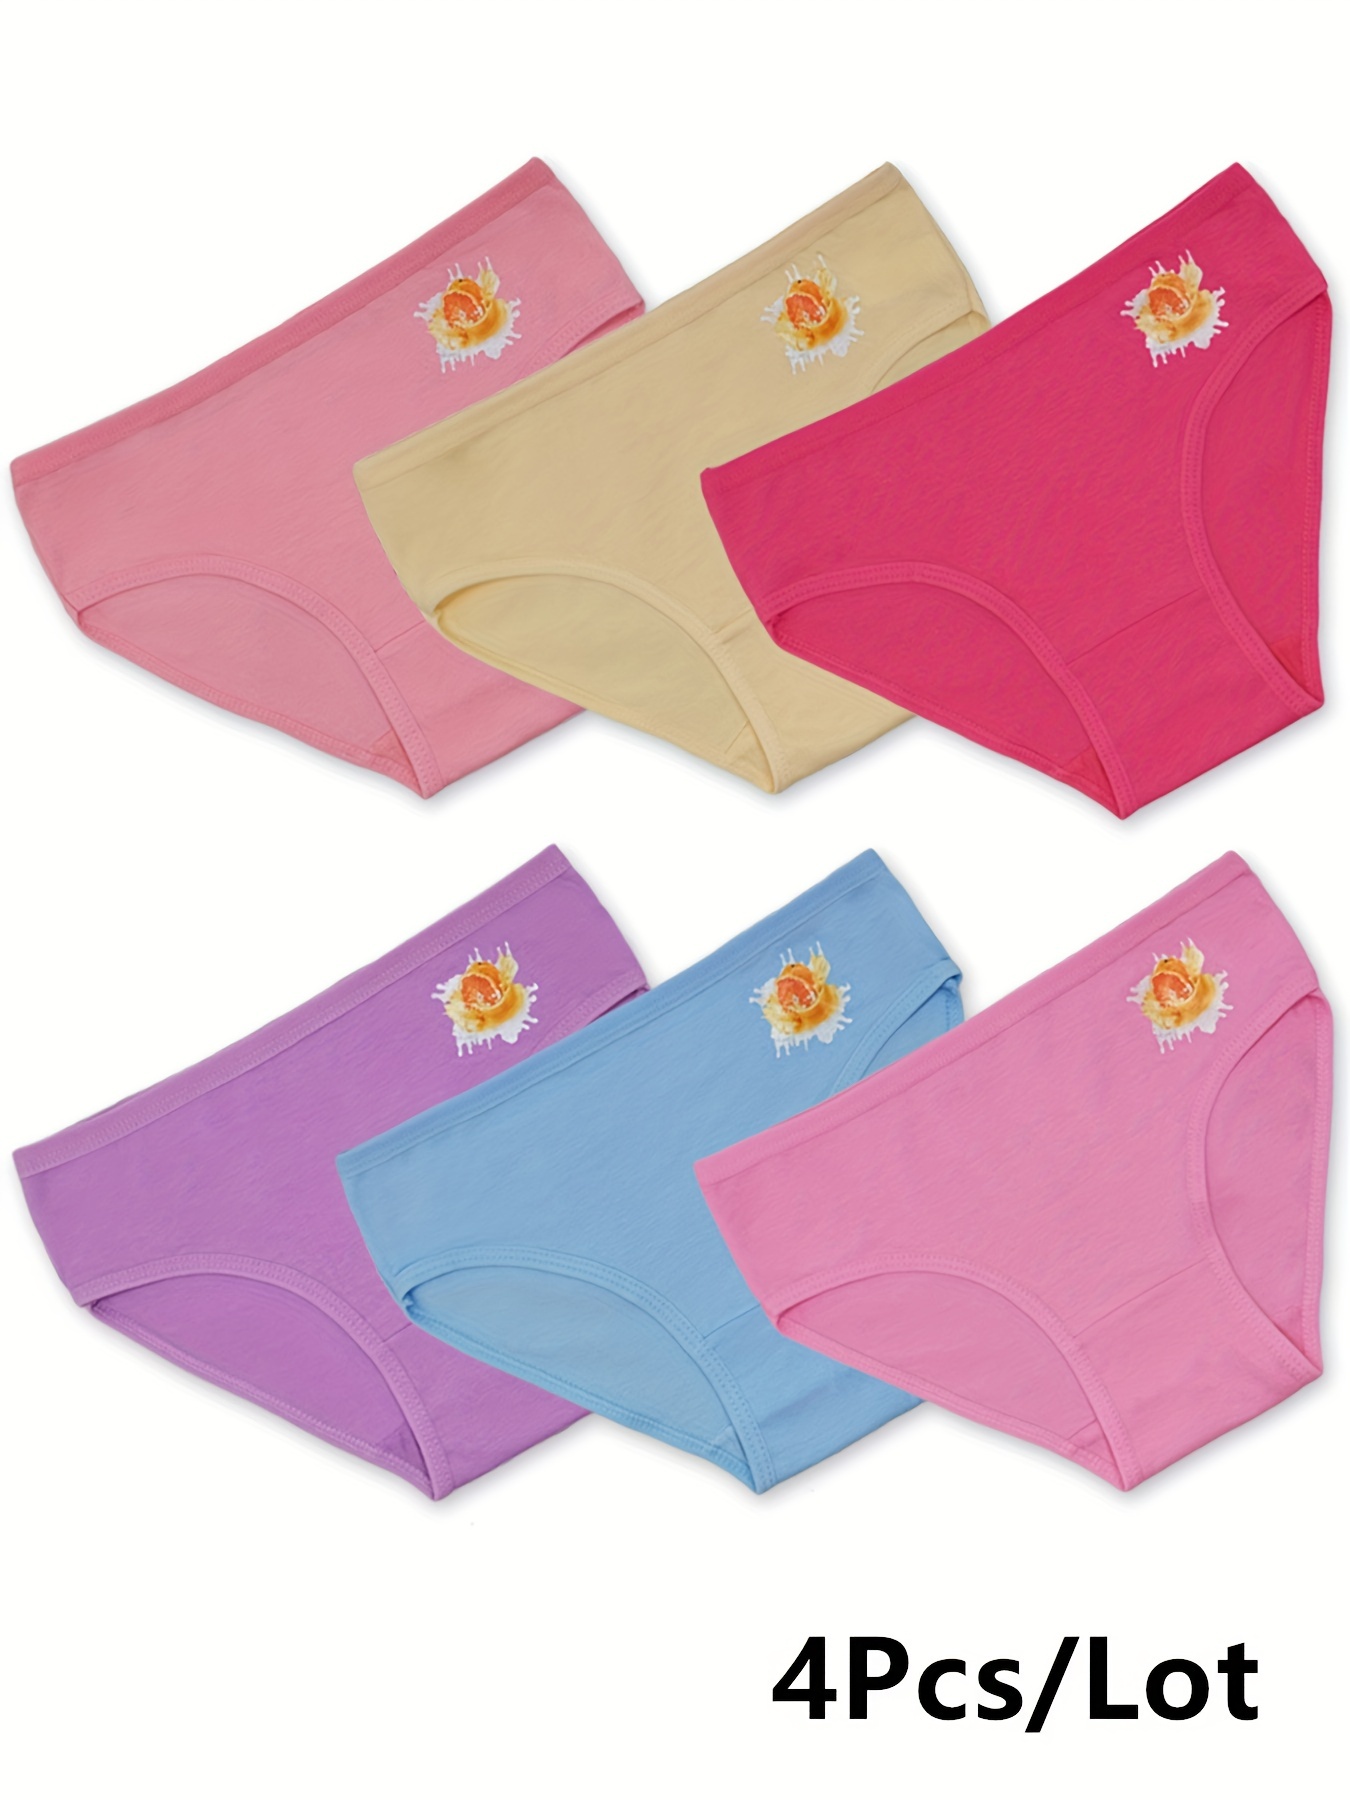 4PCS/LOT Children Girls Cotton Cartoon Underwear Panty